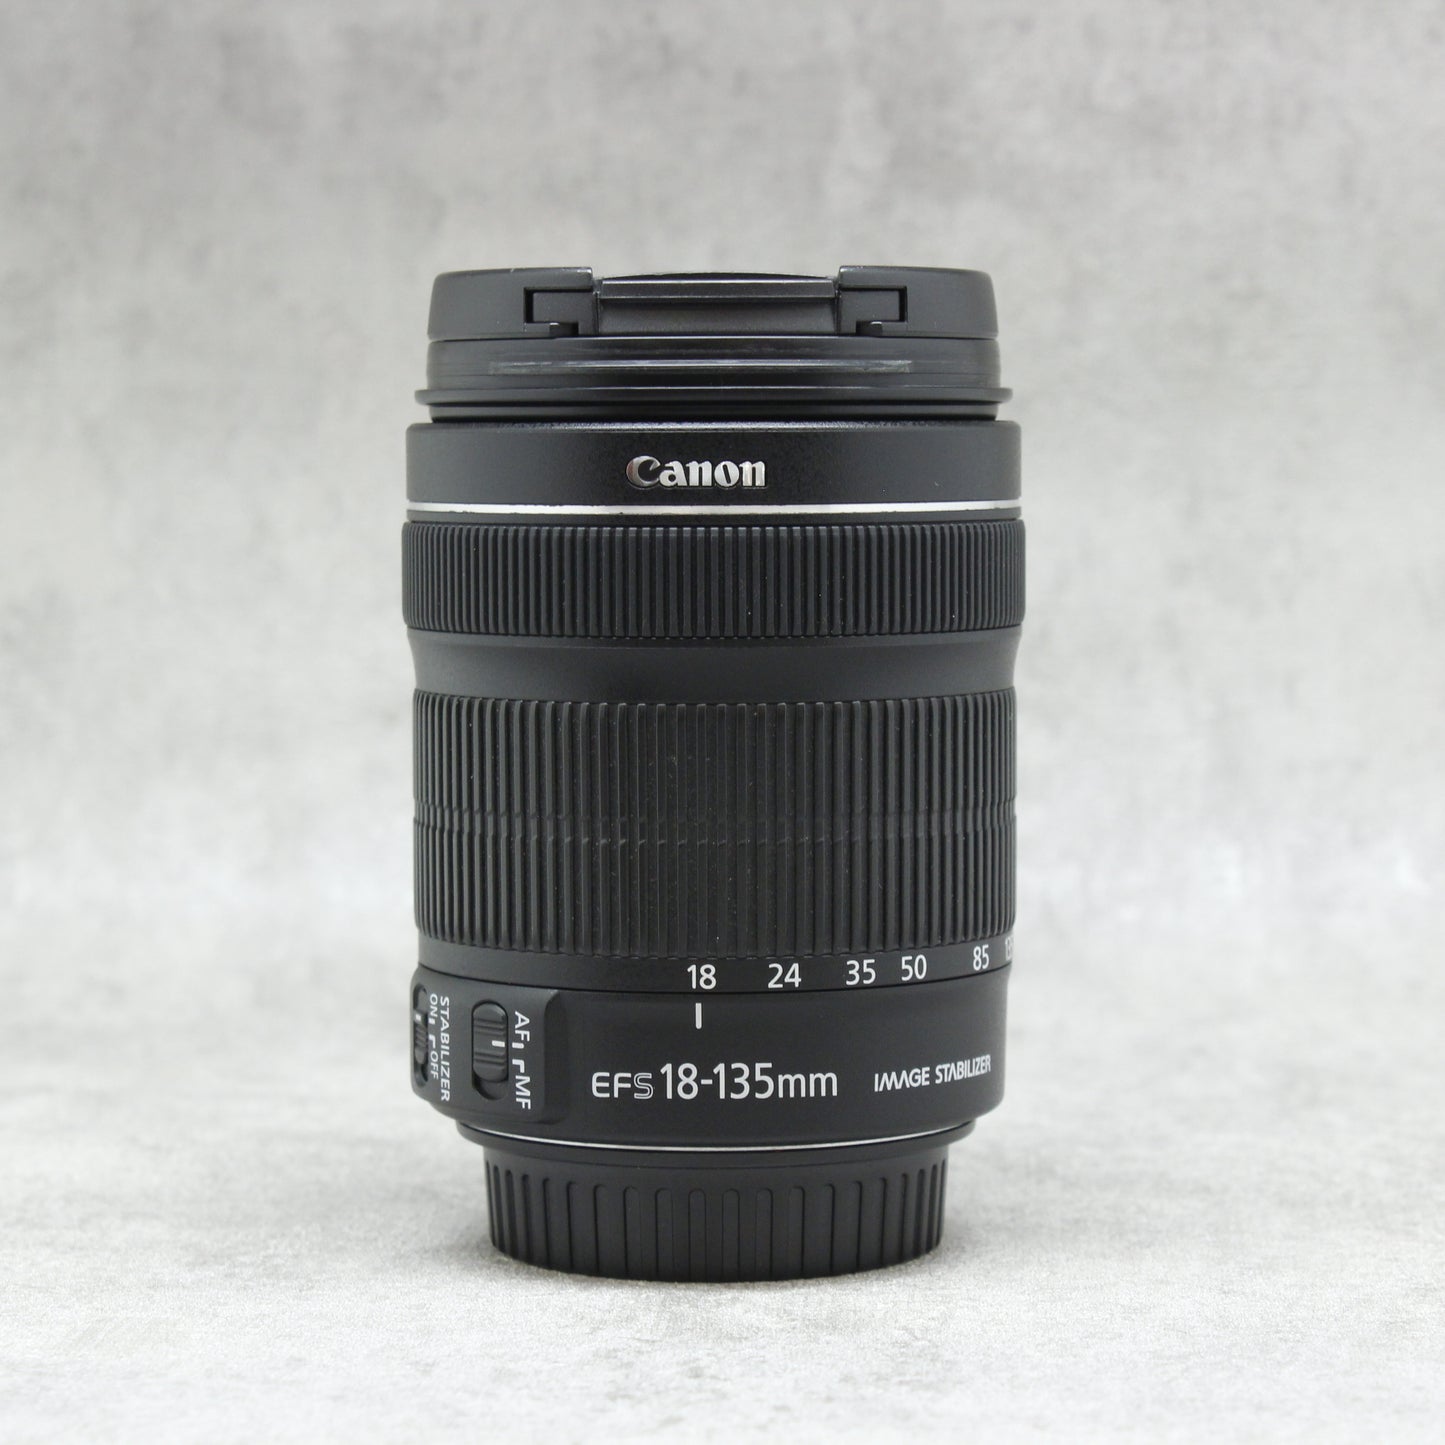 中古品 Canon EF-S 18-135mm F3.5-5.6 IS STM ☆8月19日(金)のYouTube生配信でご紹介☆